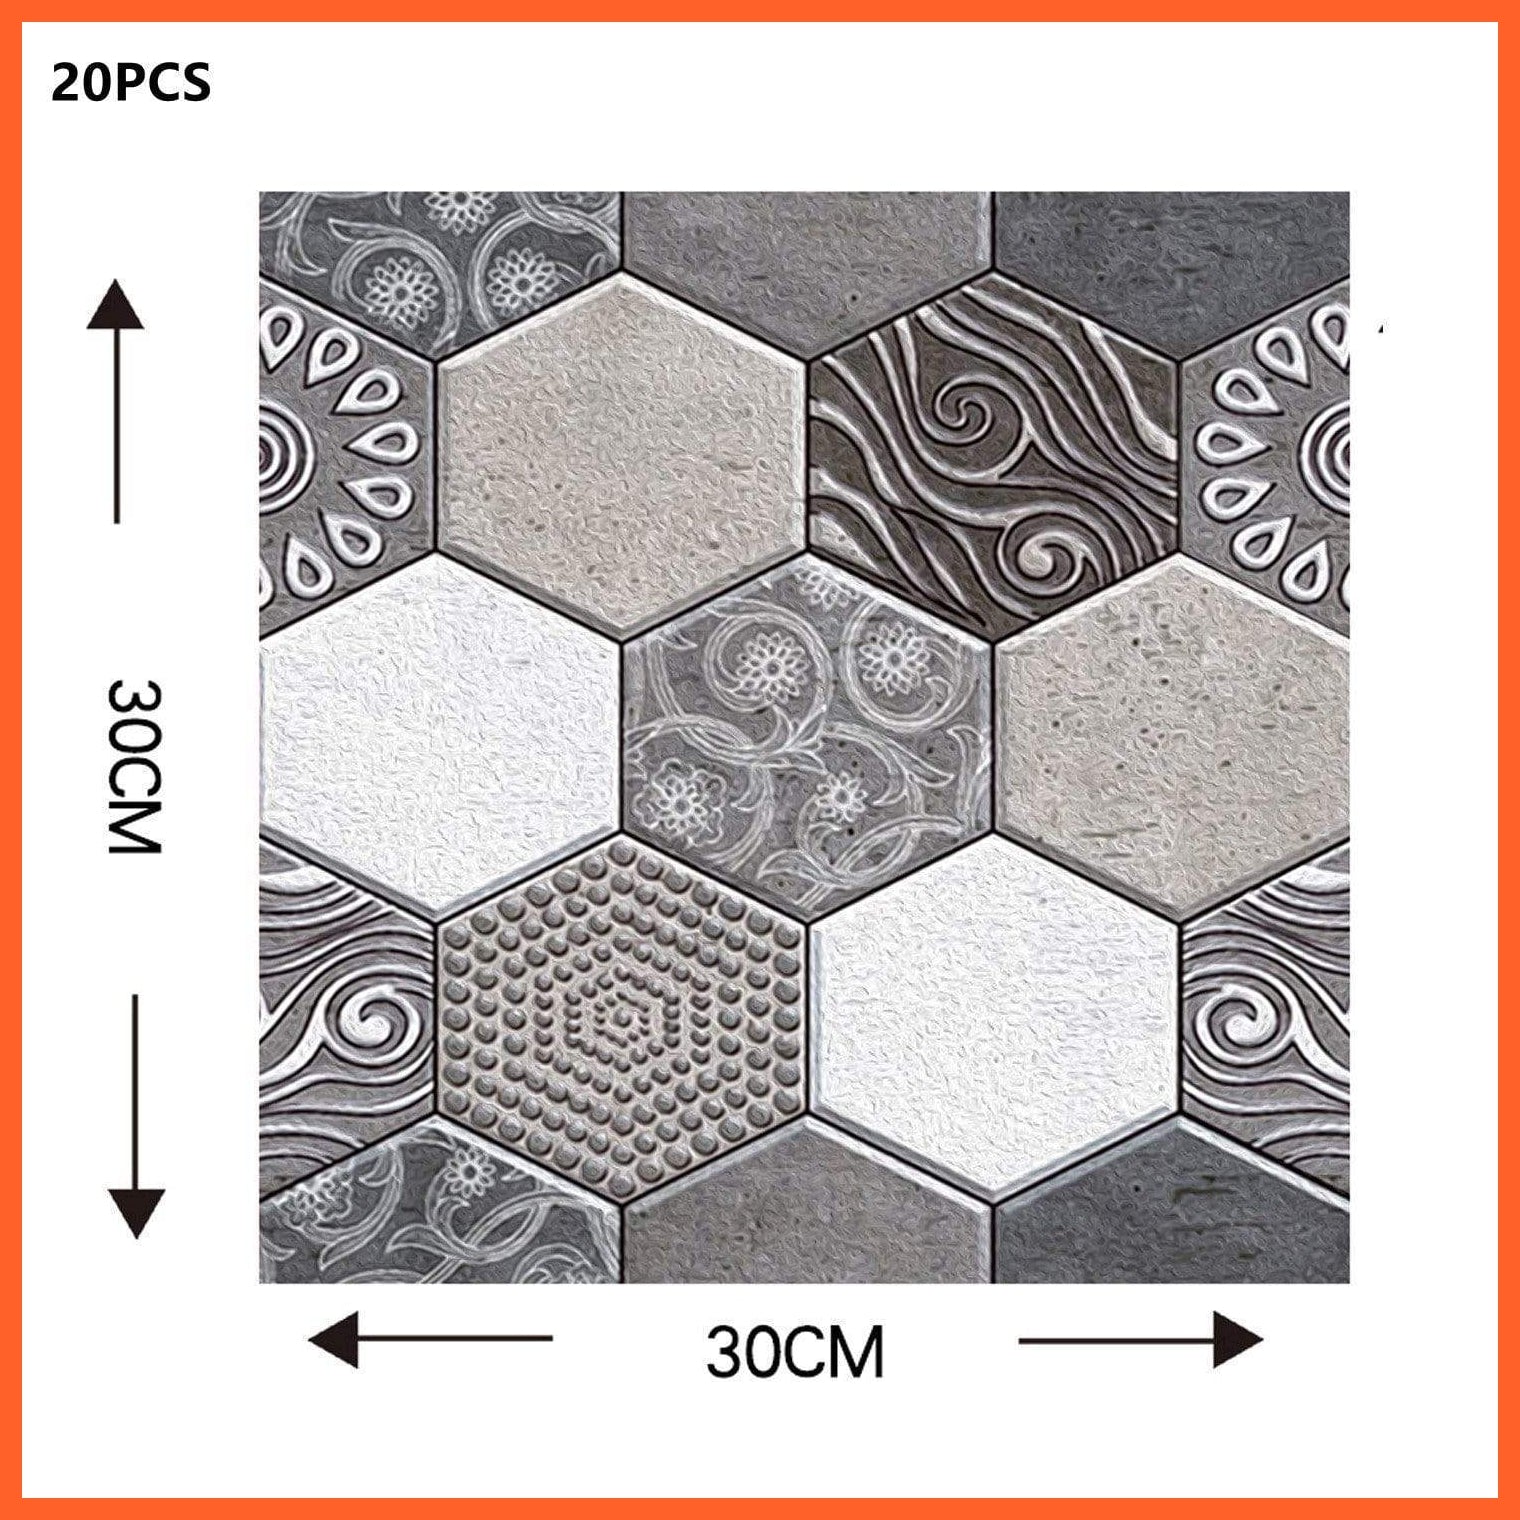 3D Tile Brick Wall Sticker Self-Adhesive Pvc Diy Wallpaper Home Wall Stickers | whatagift.com.au.